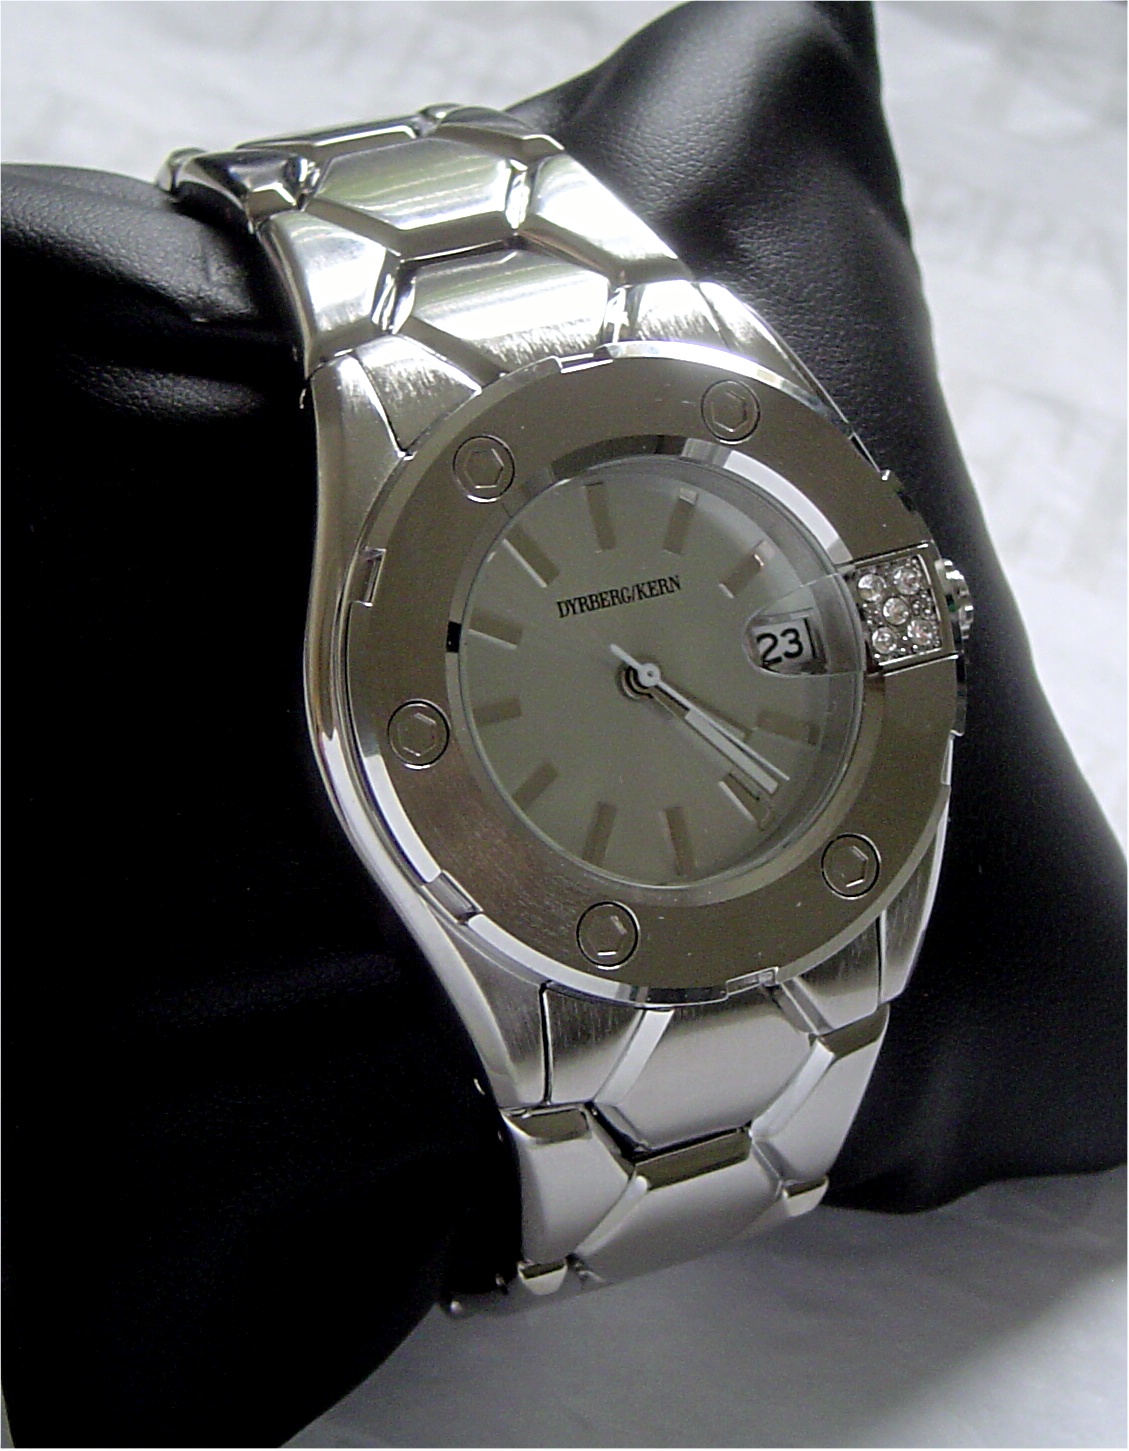 Dyrberg Kern timepiece Millenia BMC 2S2